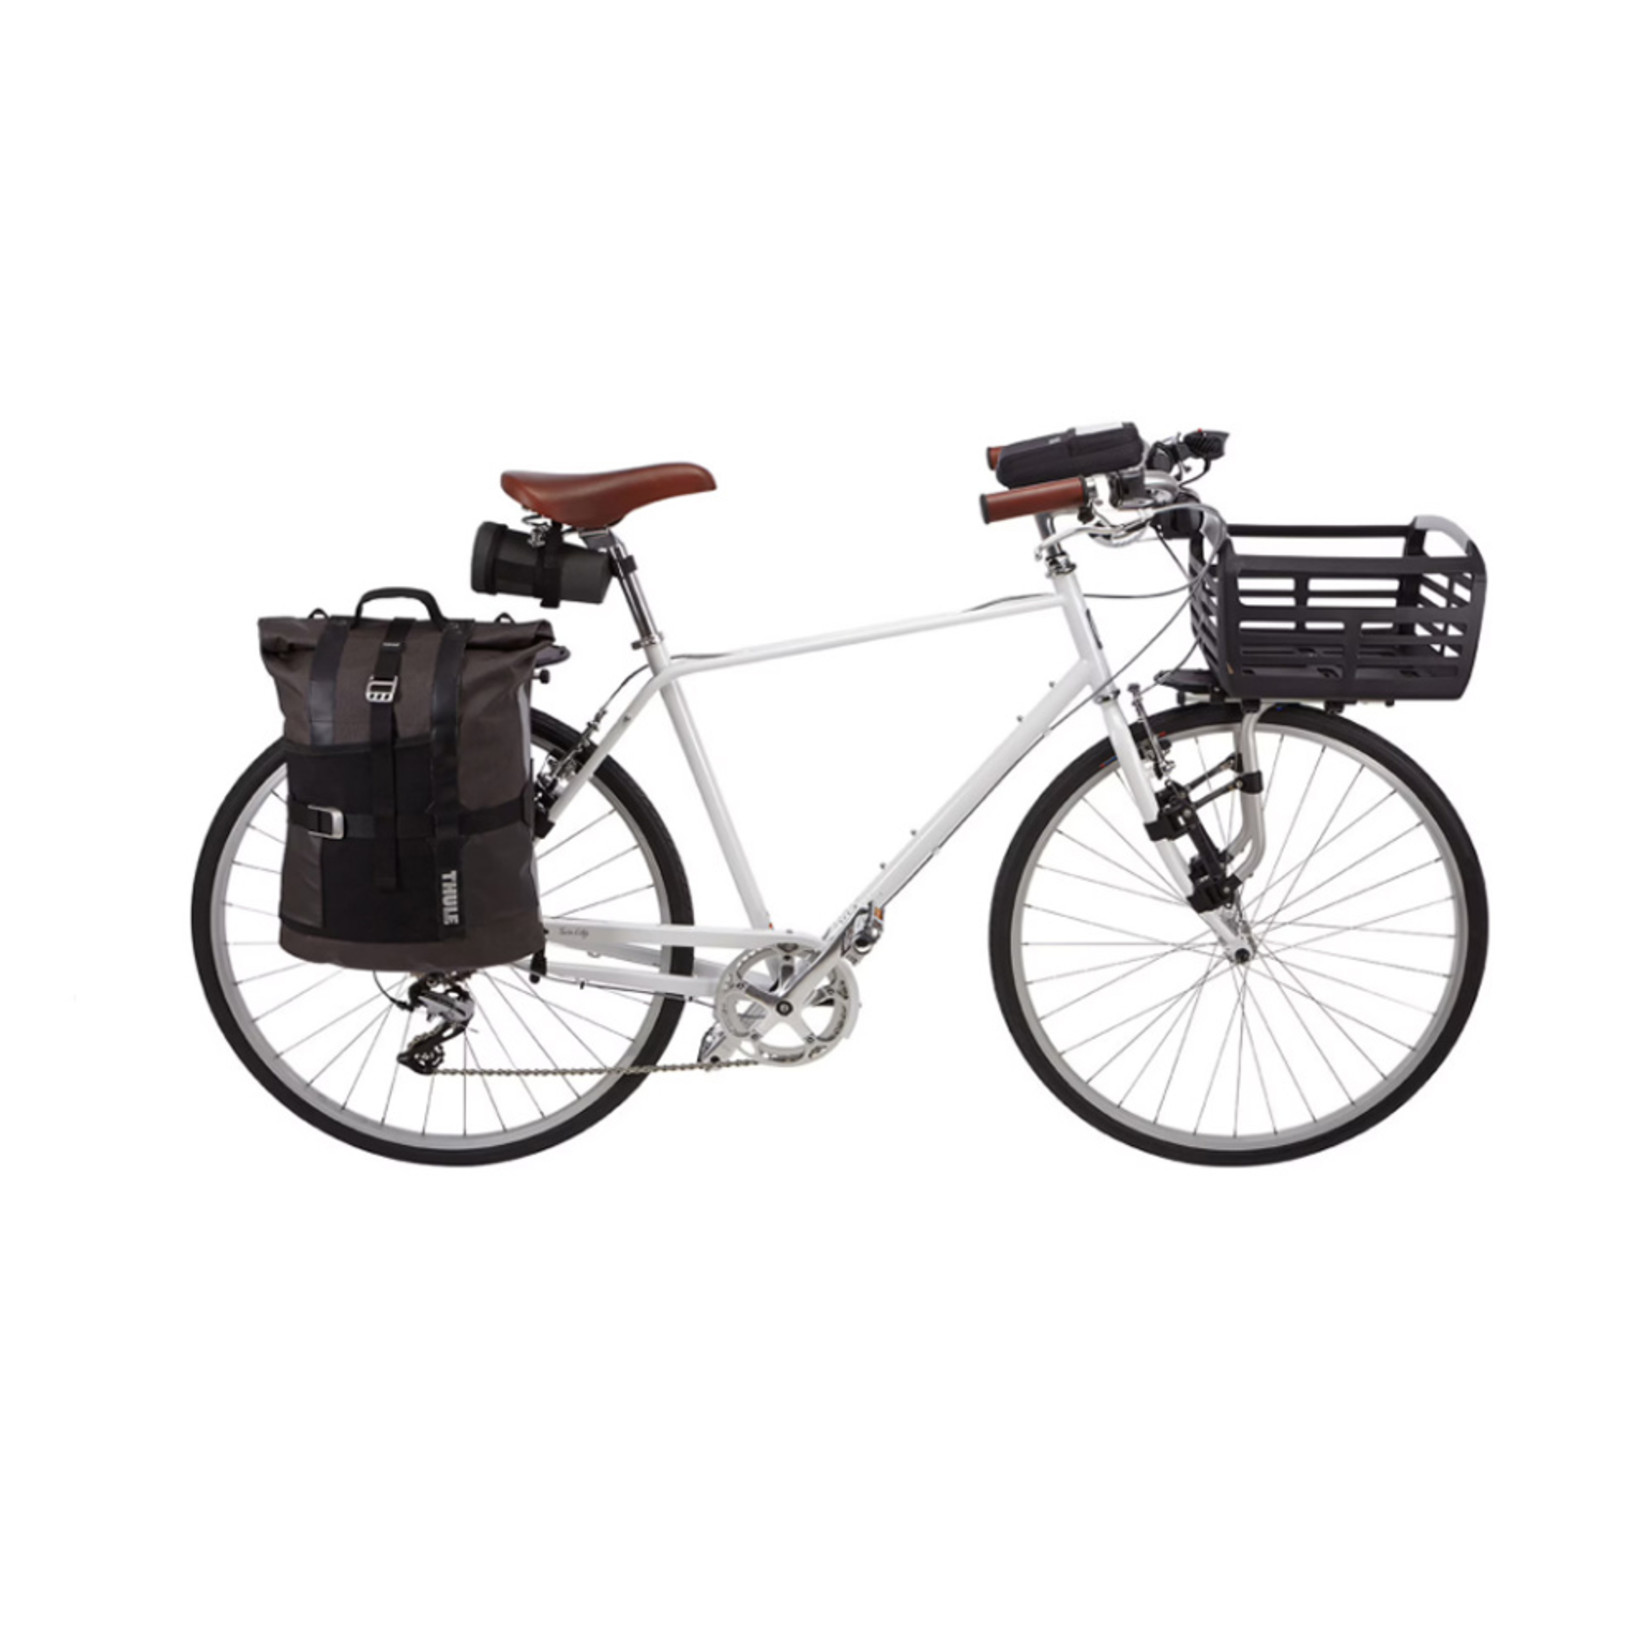 Thule Thule Pack N Pedal 26.5L Bike Basket  Black Dimensions 40.1 x 34.3 x 23.2 cm